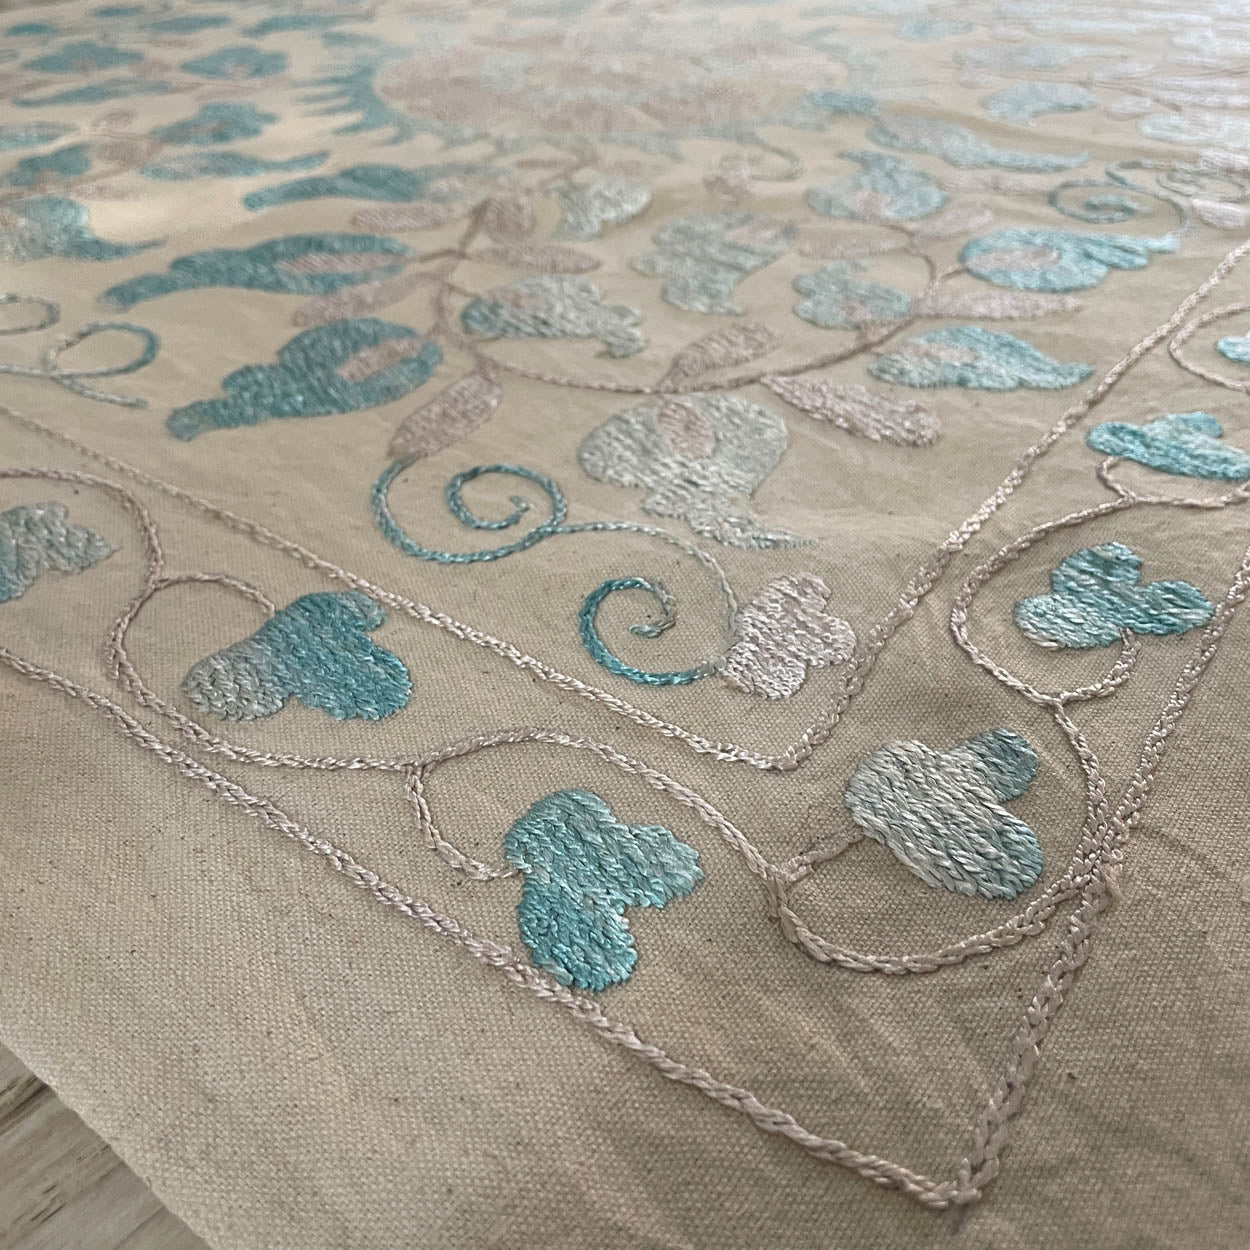 Uzbeki Suzani Hand Embroidered Textile Wall Hanging | Home Décor | Square | 98cm x 88cm SUZ220518012 - Wildash London